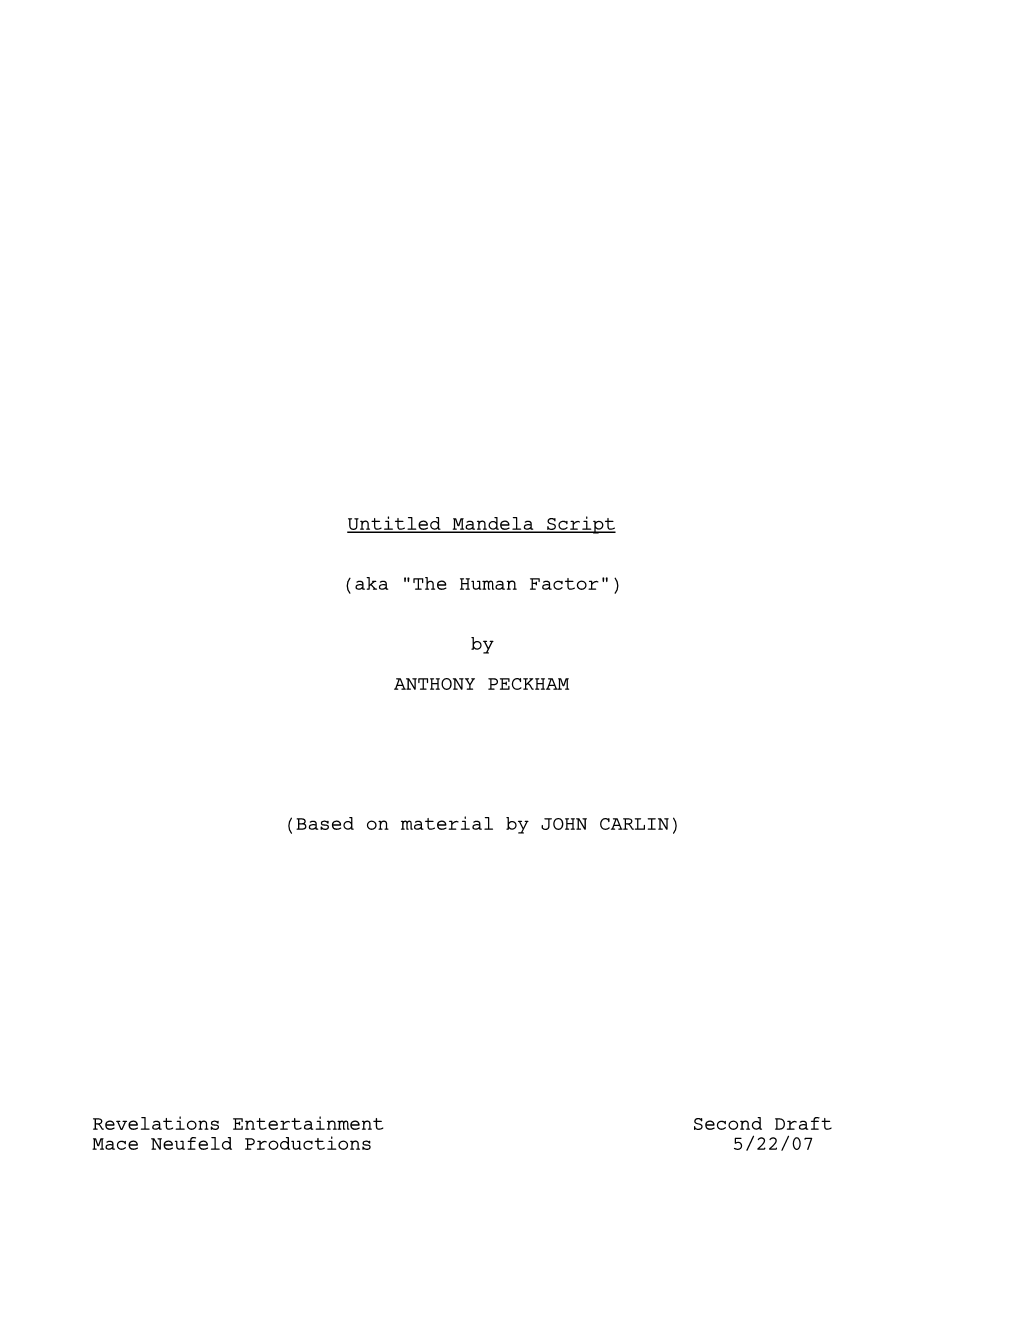 Mandela Script Second Draft Revised (2)